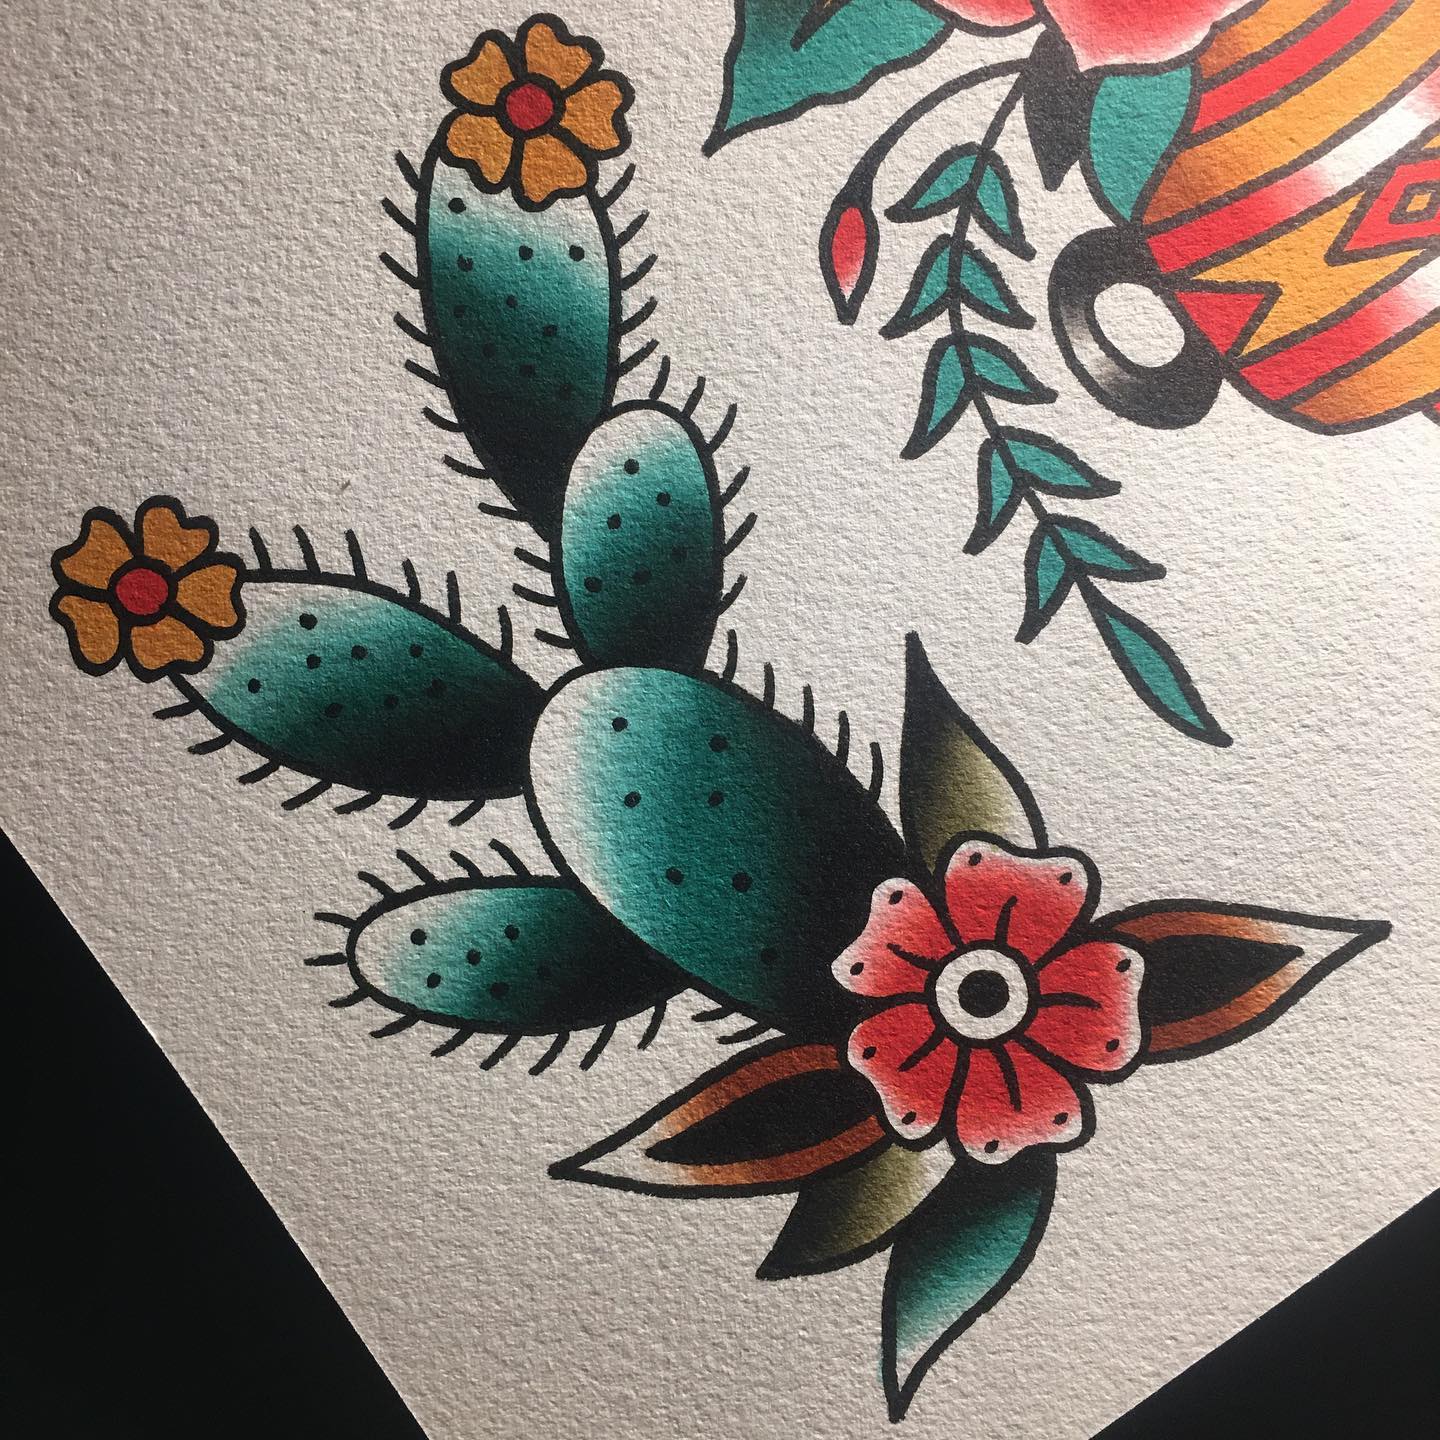 CACTUS...
#cactus #cactustattoo #watercolor #watercolour #watercolorpainting #pa